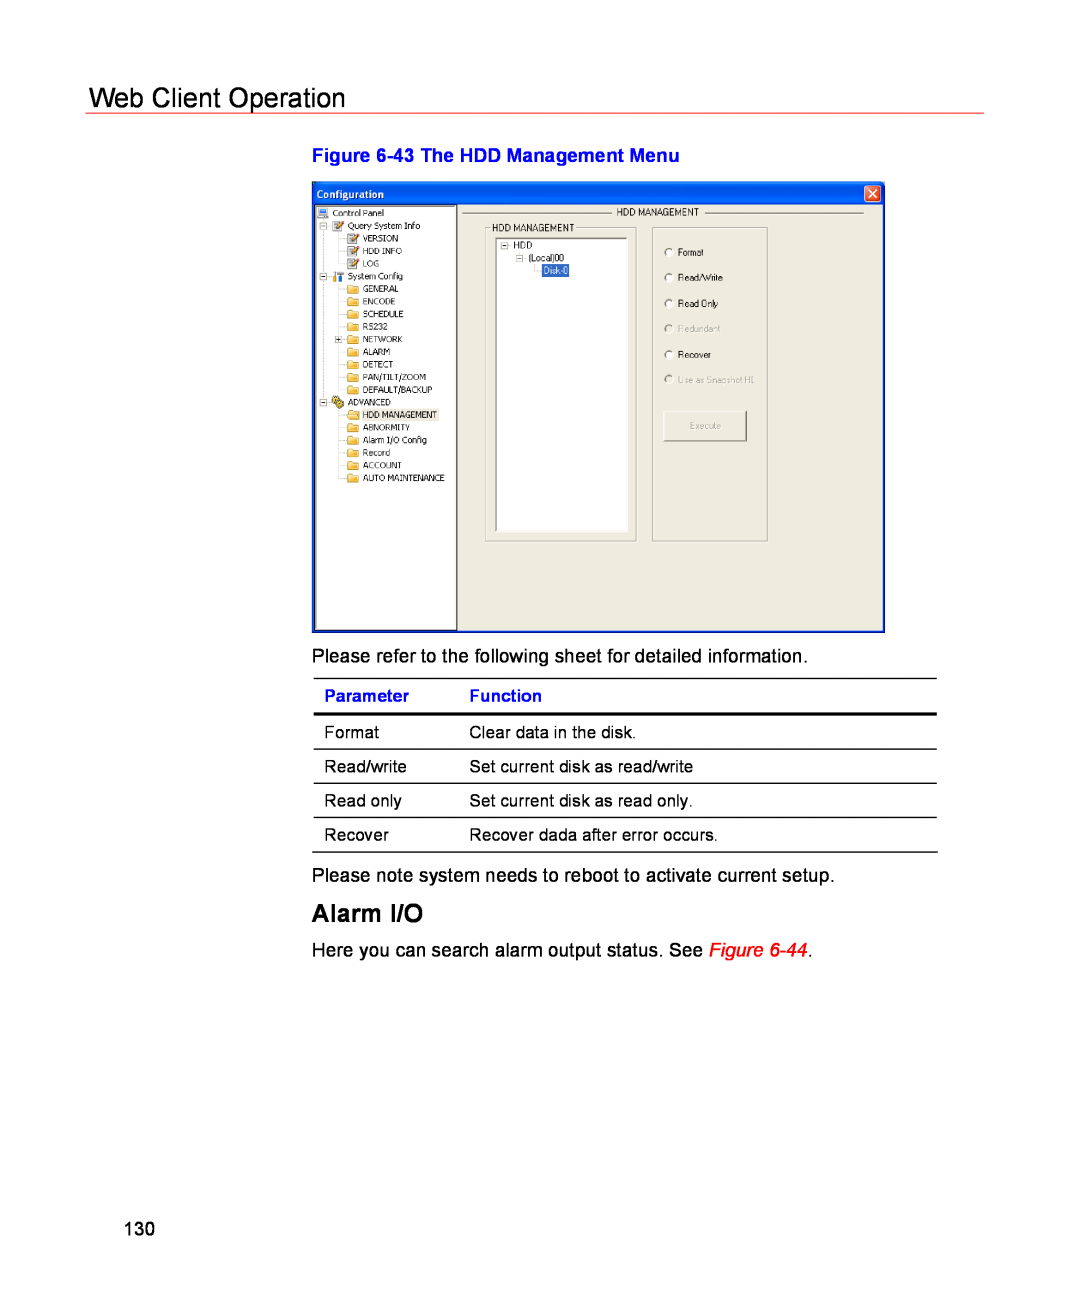 Honeywell HSVR-04, HSVR-16 user manual Alarm I/O, Web Client Operation, 43 The HDD Management Menu, Parameter, Function 